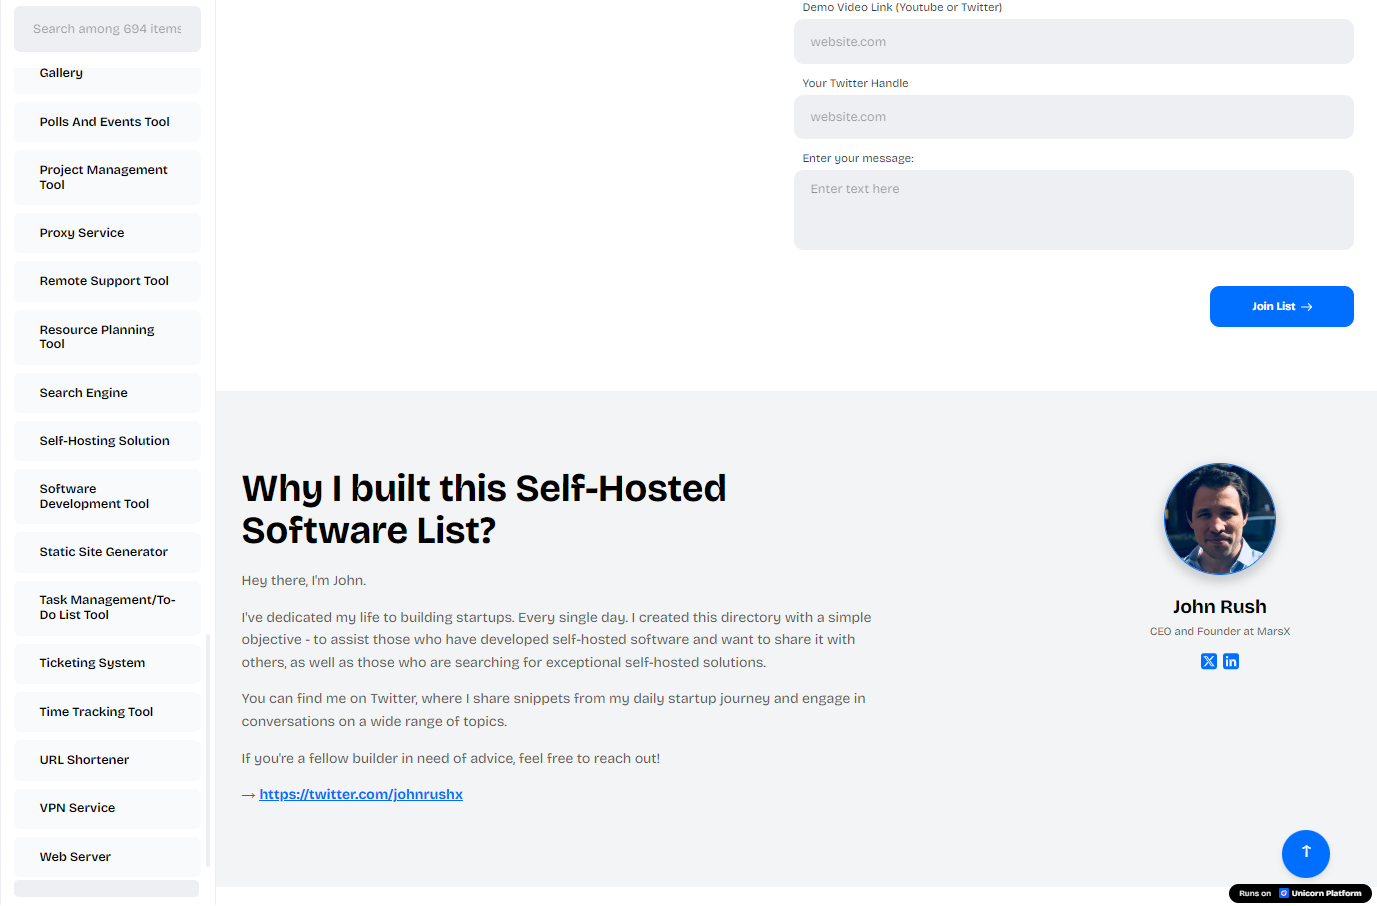 HostedSoftware.org Self-Hosted Software List